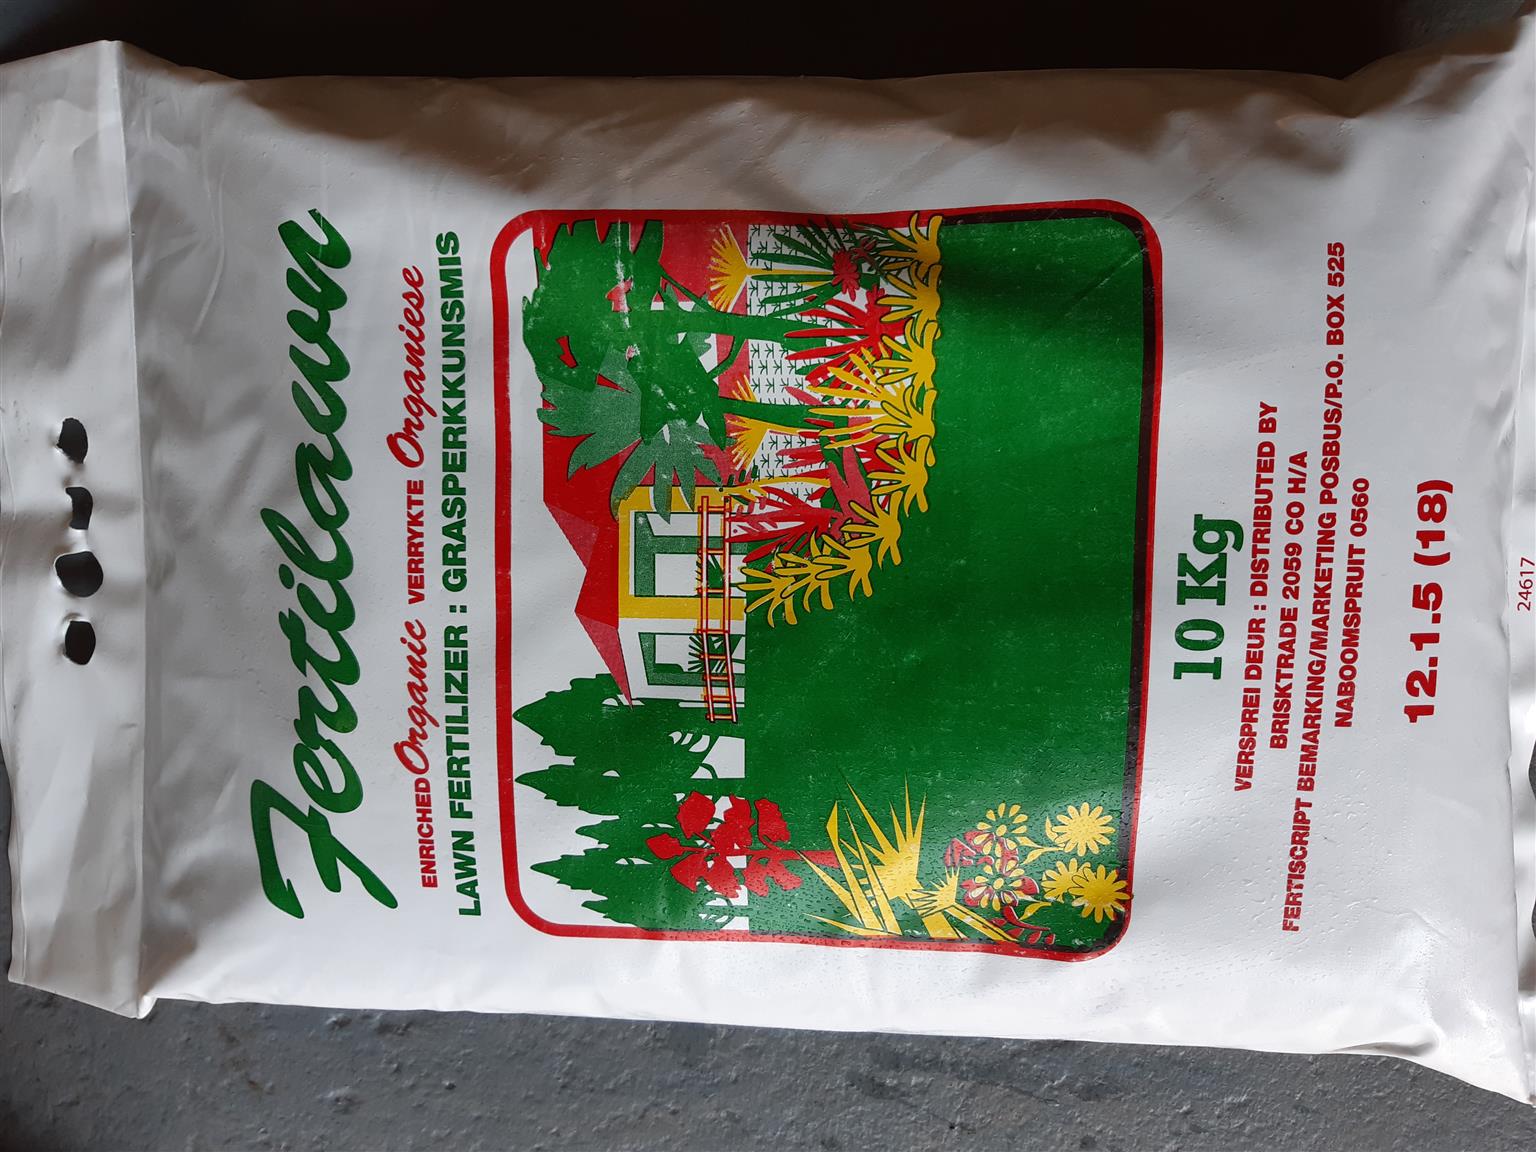 Fertilizer for the greenest, lushest lawn - Fertilawn organic lawn fertilizer - just add water 